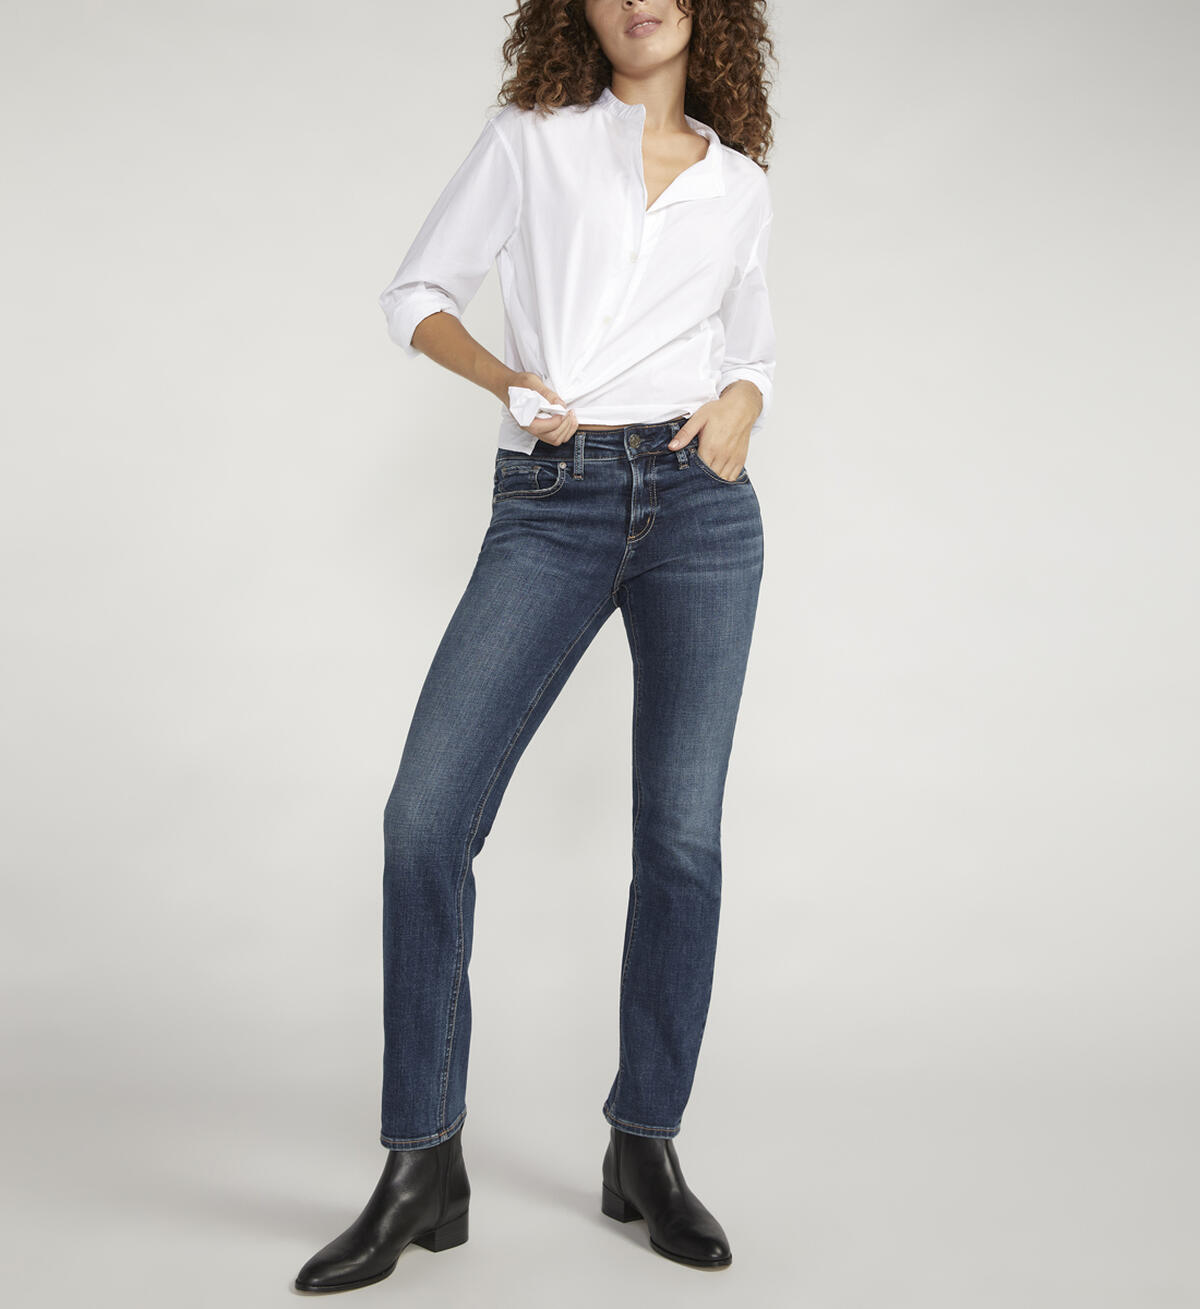 Elyse Mid Rise Straight Leg Jeans, Indigo, hi-res image number 3